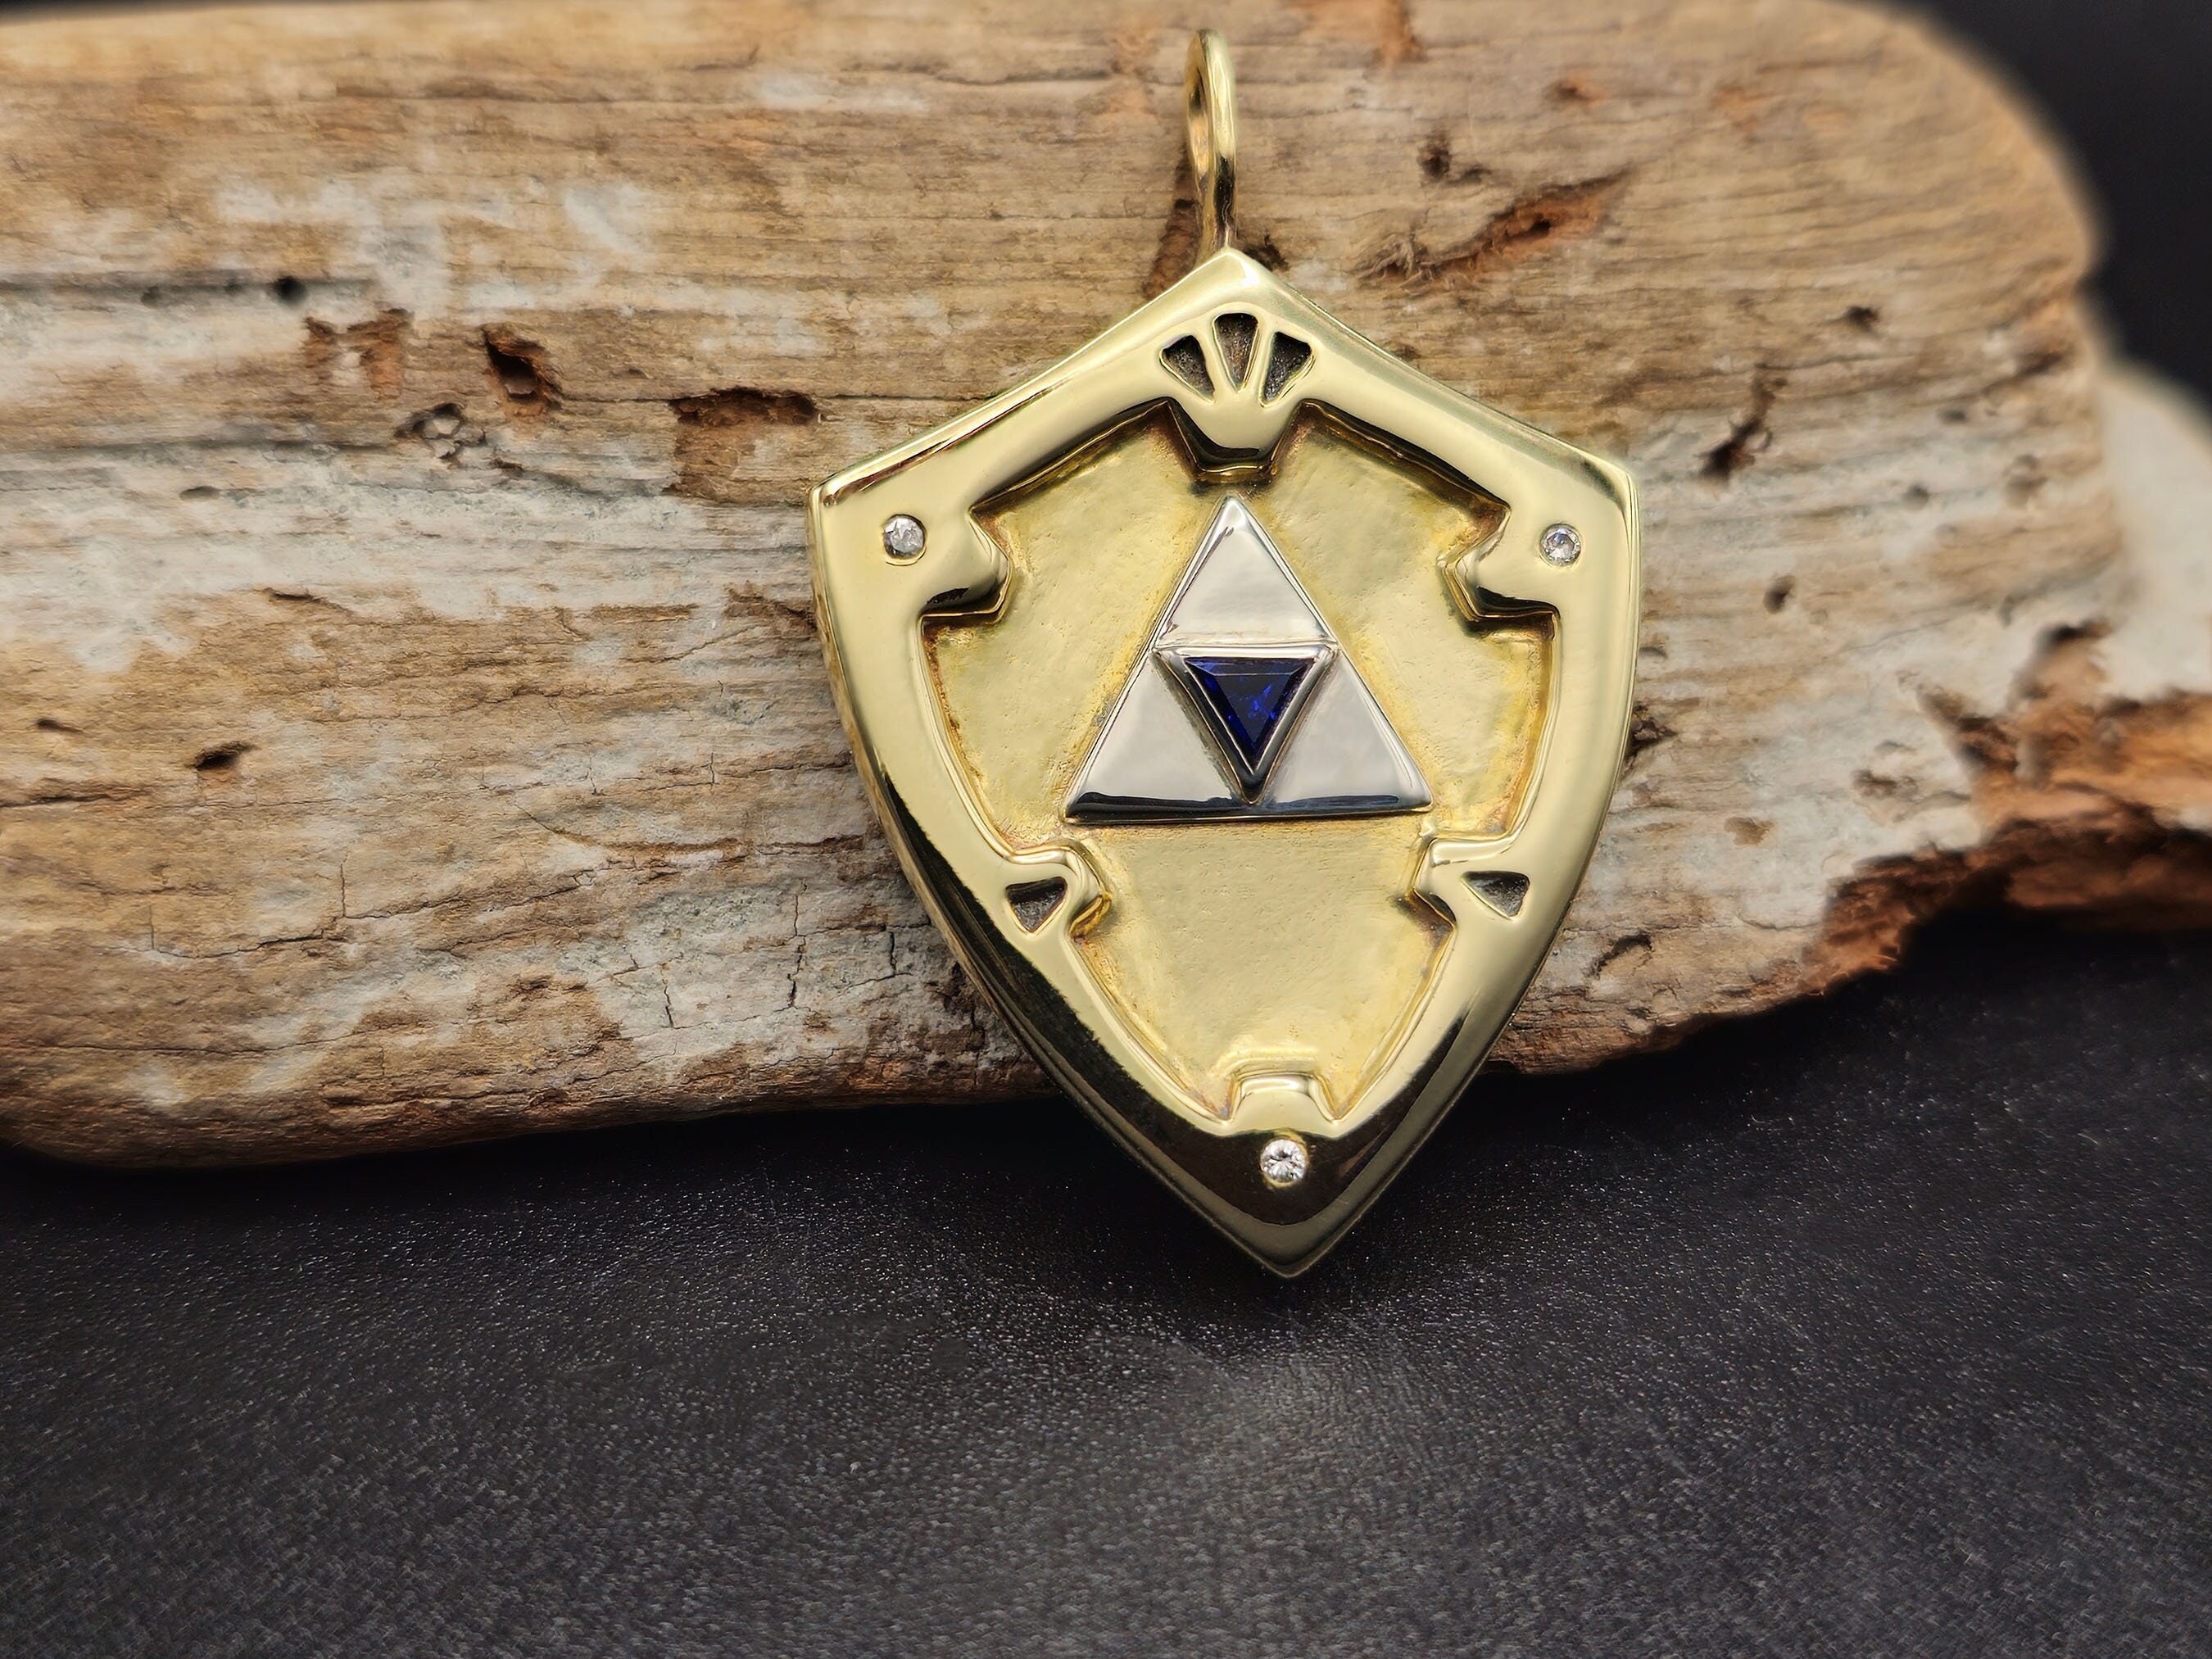 The Legend of Zelda Triforce Necklace Shield Shaped Pendant Charms